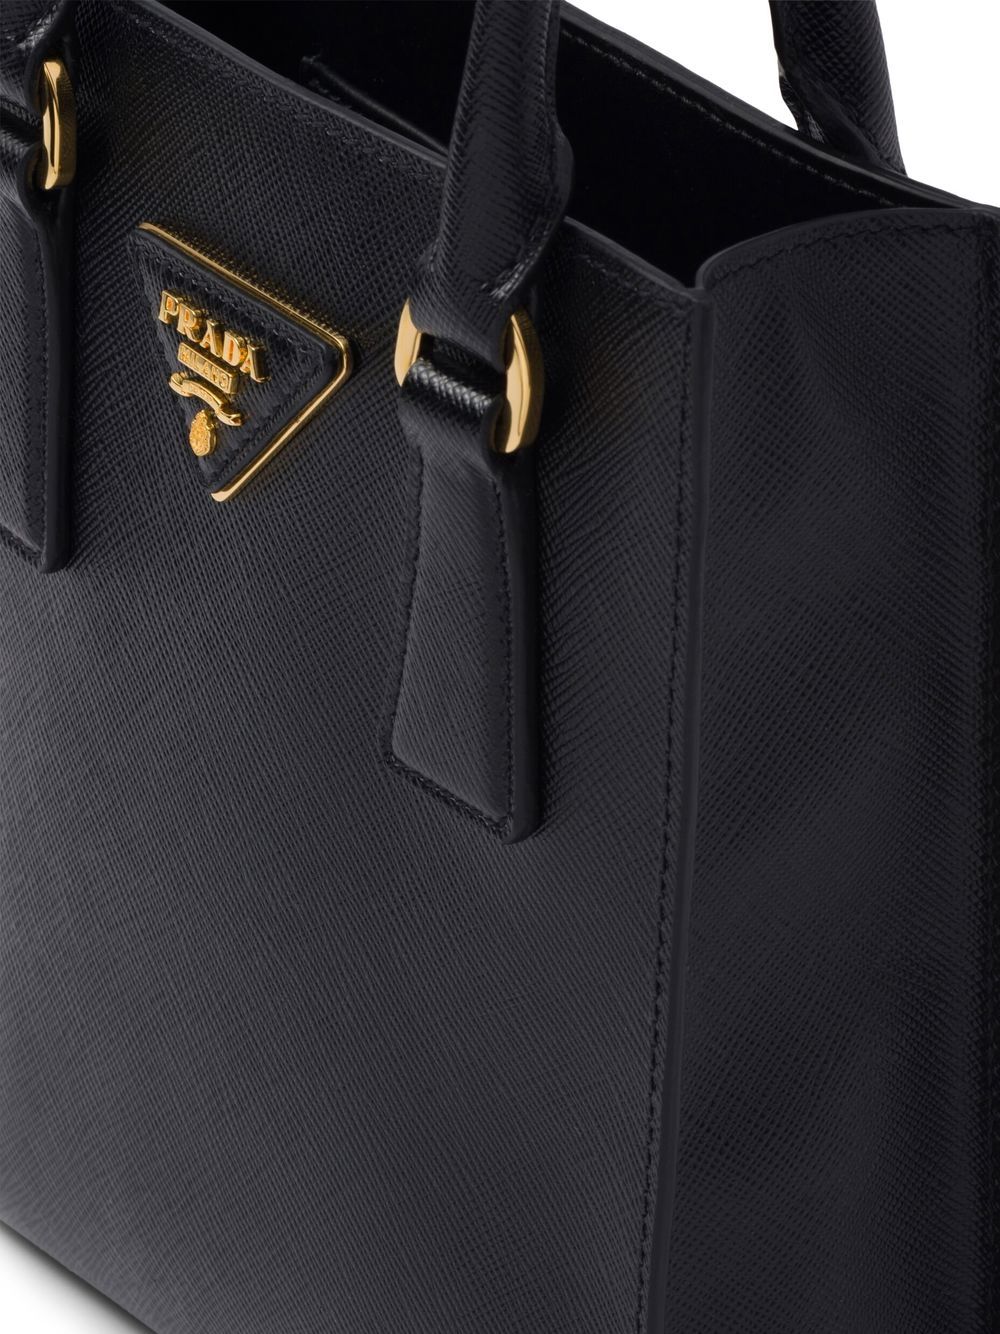 Prada Triangle Saffiano Leather Shoulder Bag - Farfetch